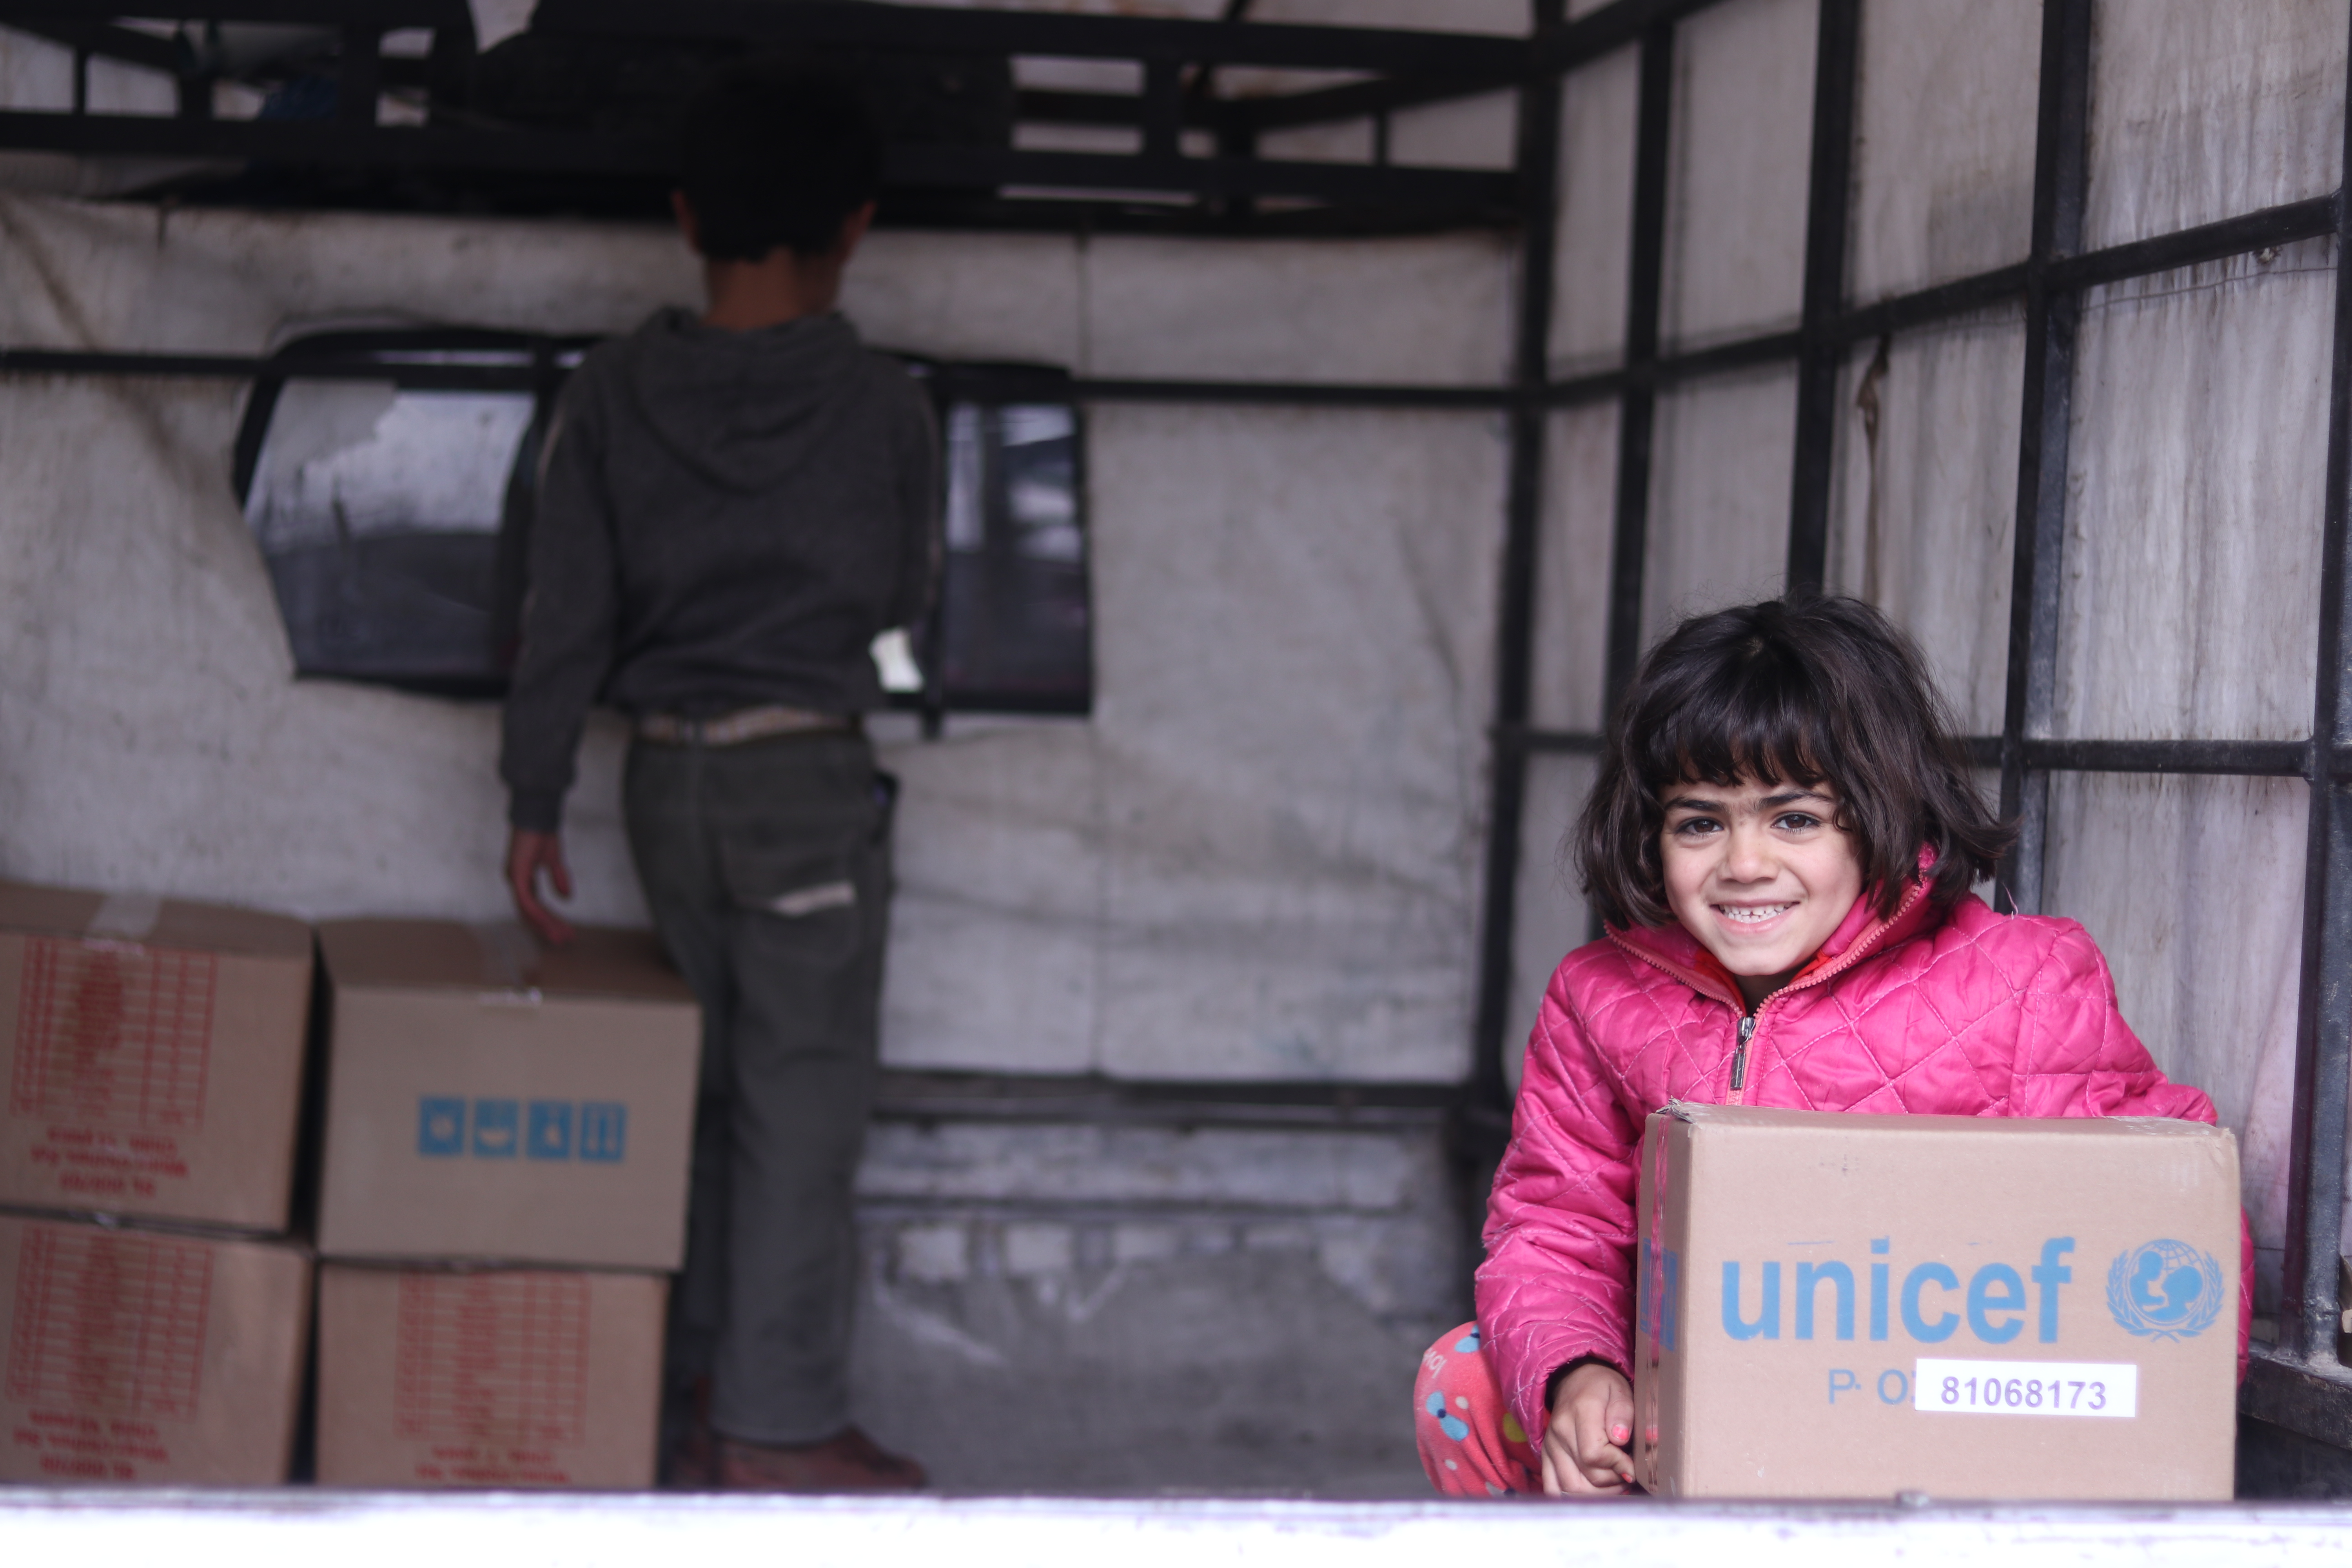 Louis Vuitton & UNICEF: A Better Future